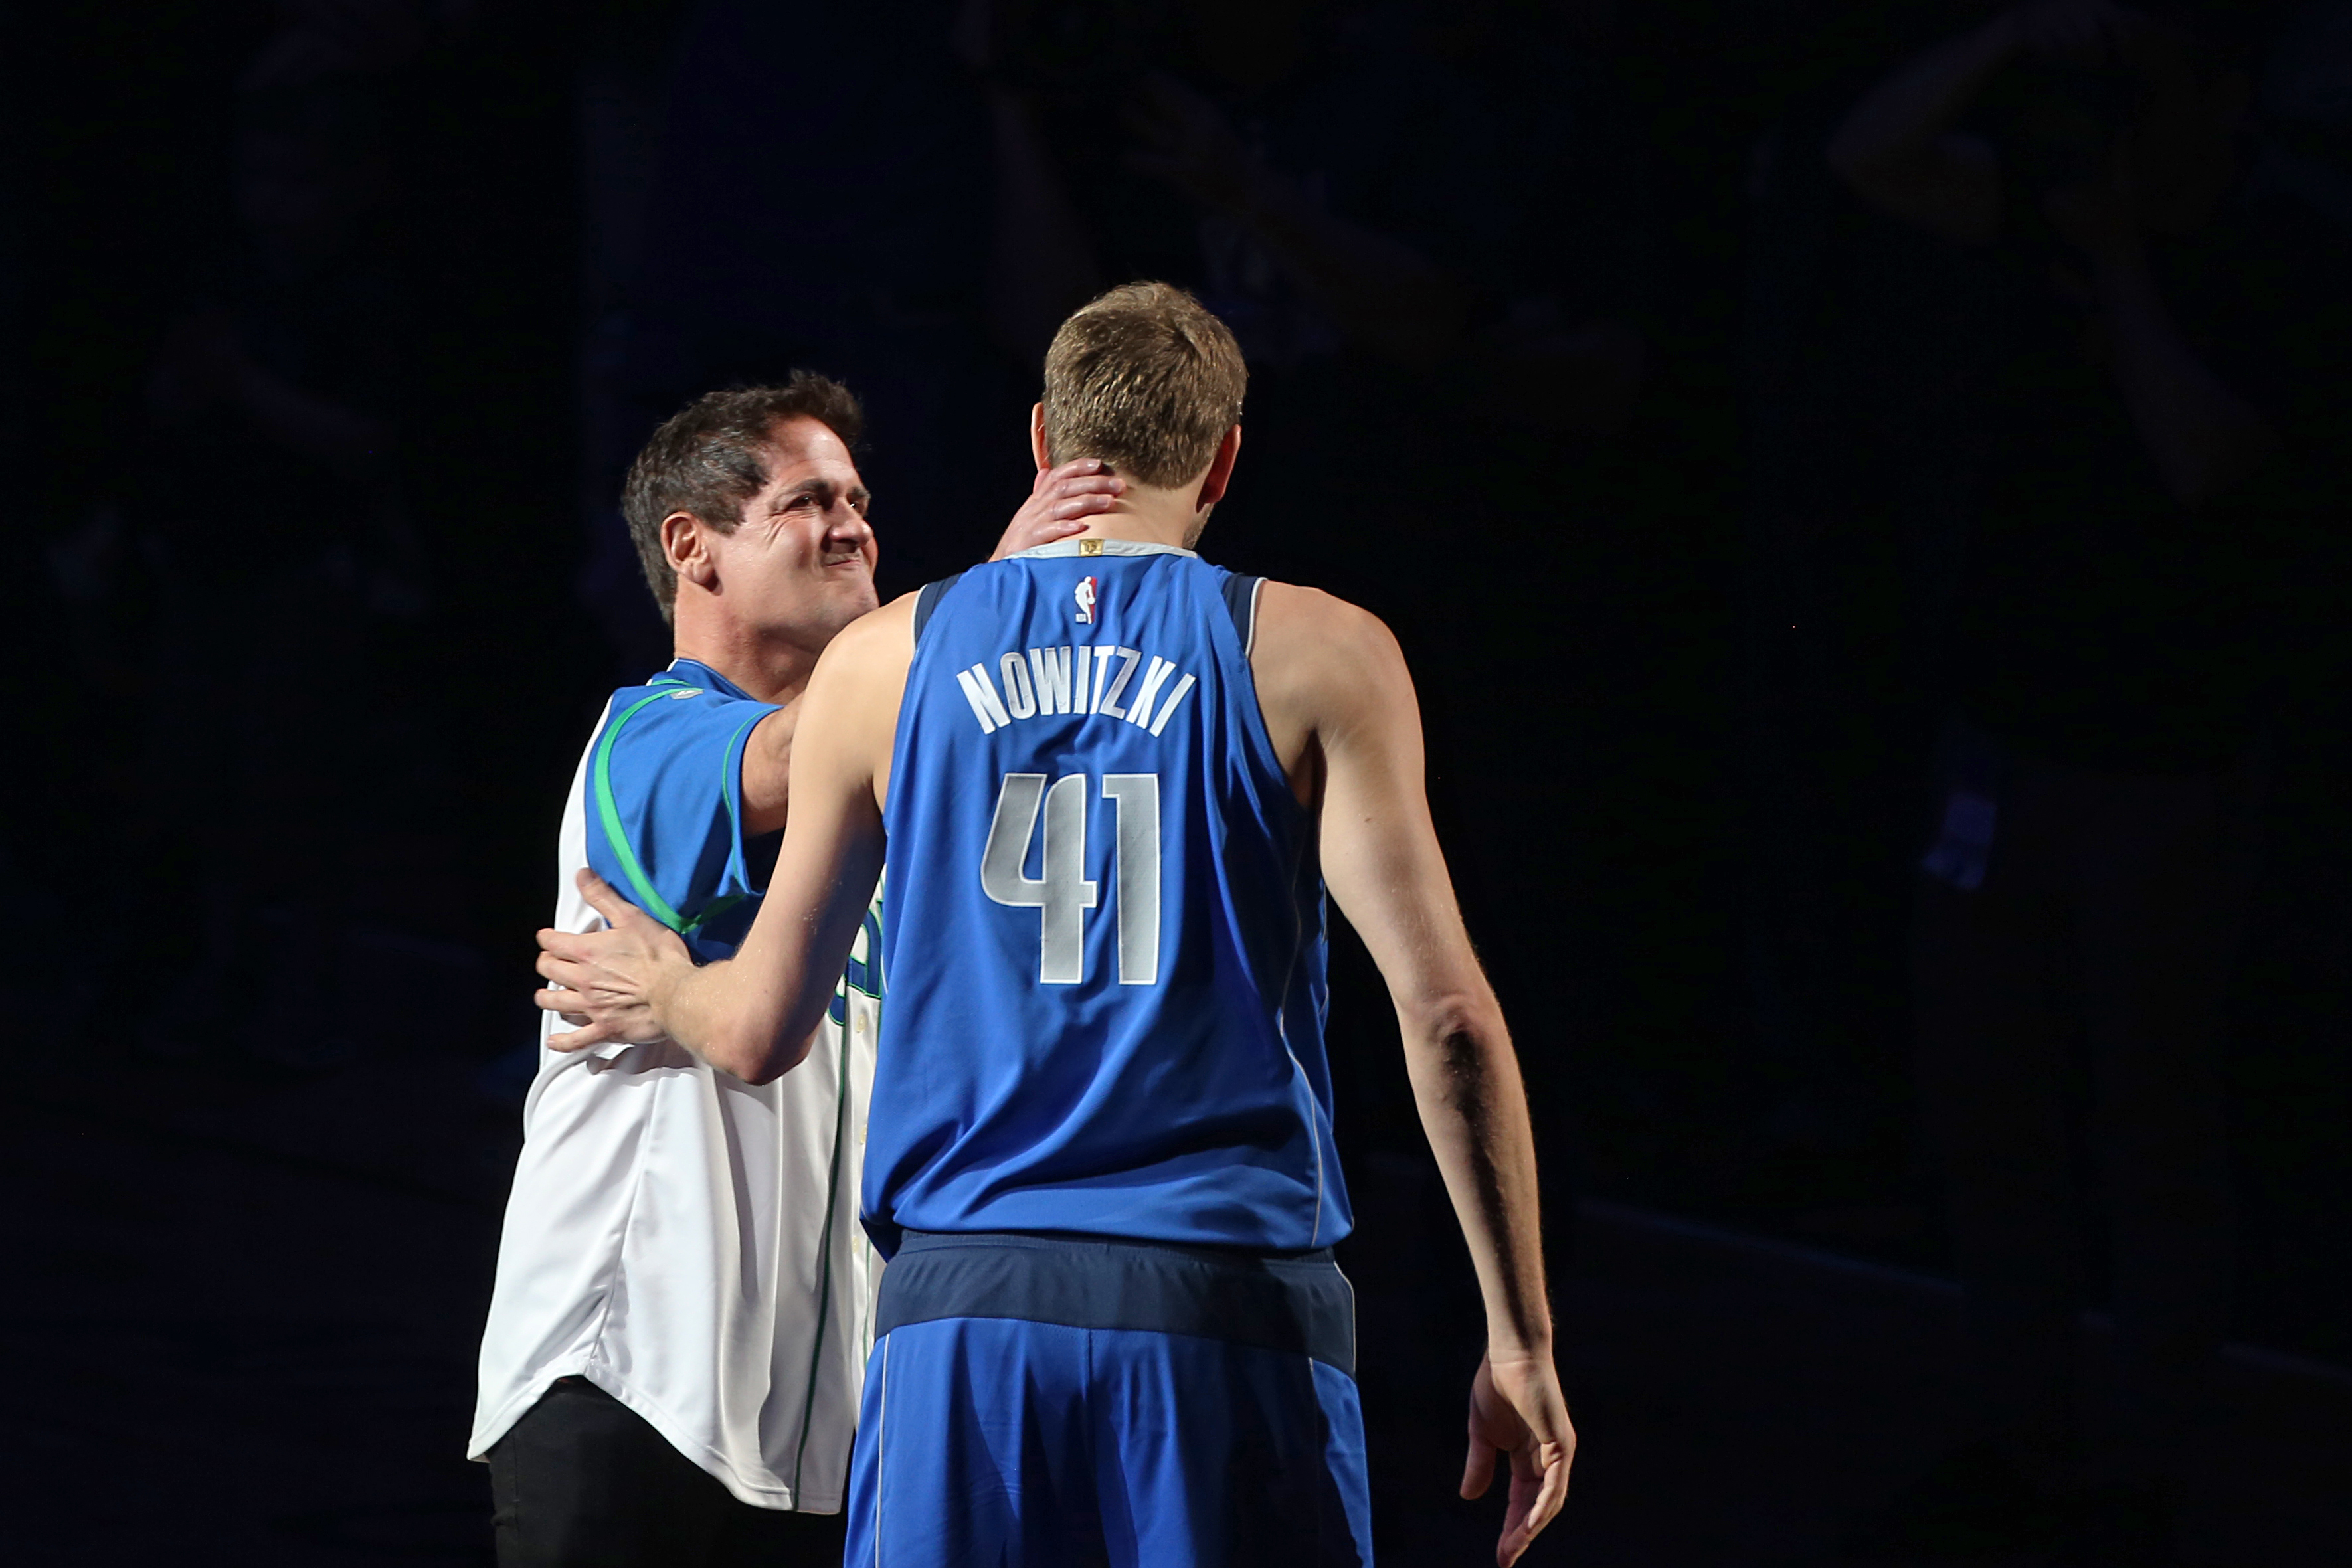 Dallas Mavericks governor Mark Cuban embraces Dirk Nowitzki after Dirk's final home game